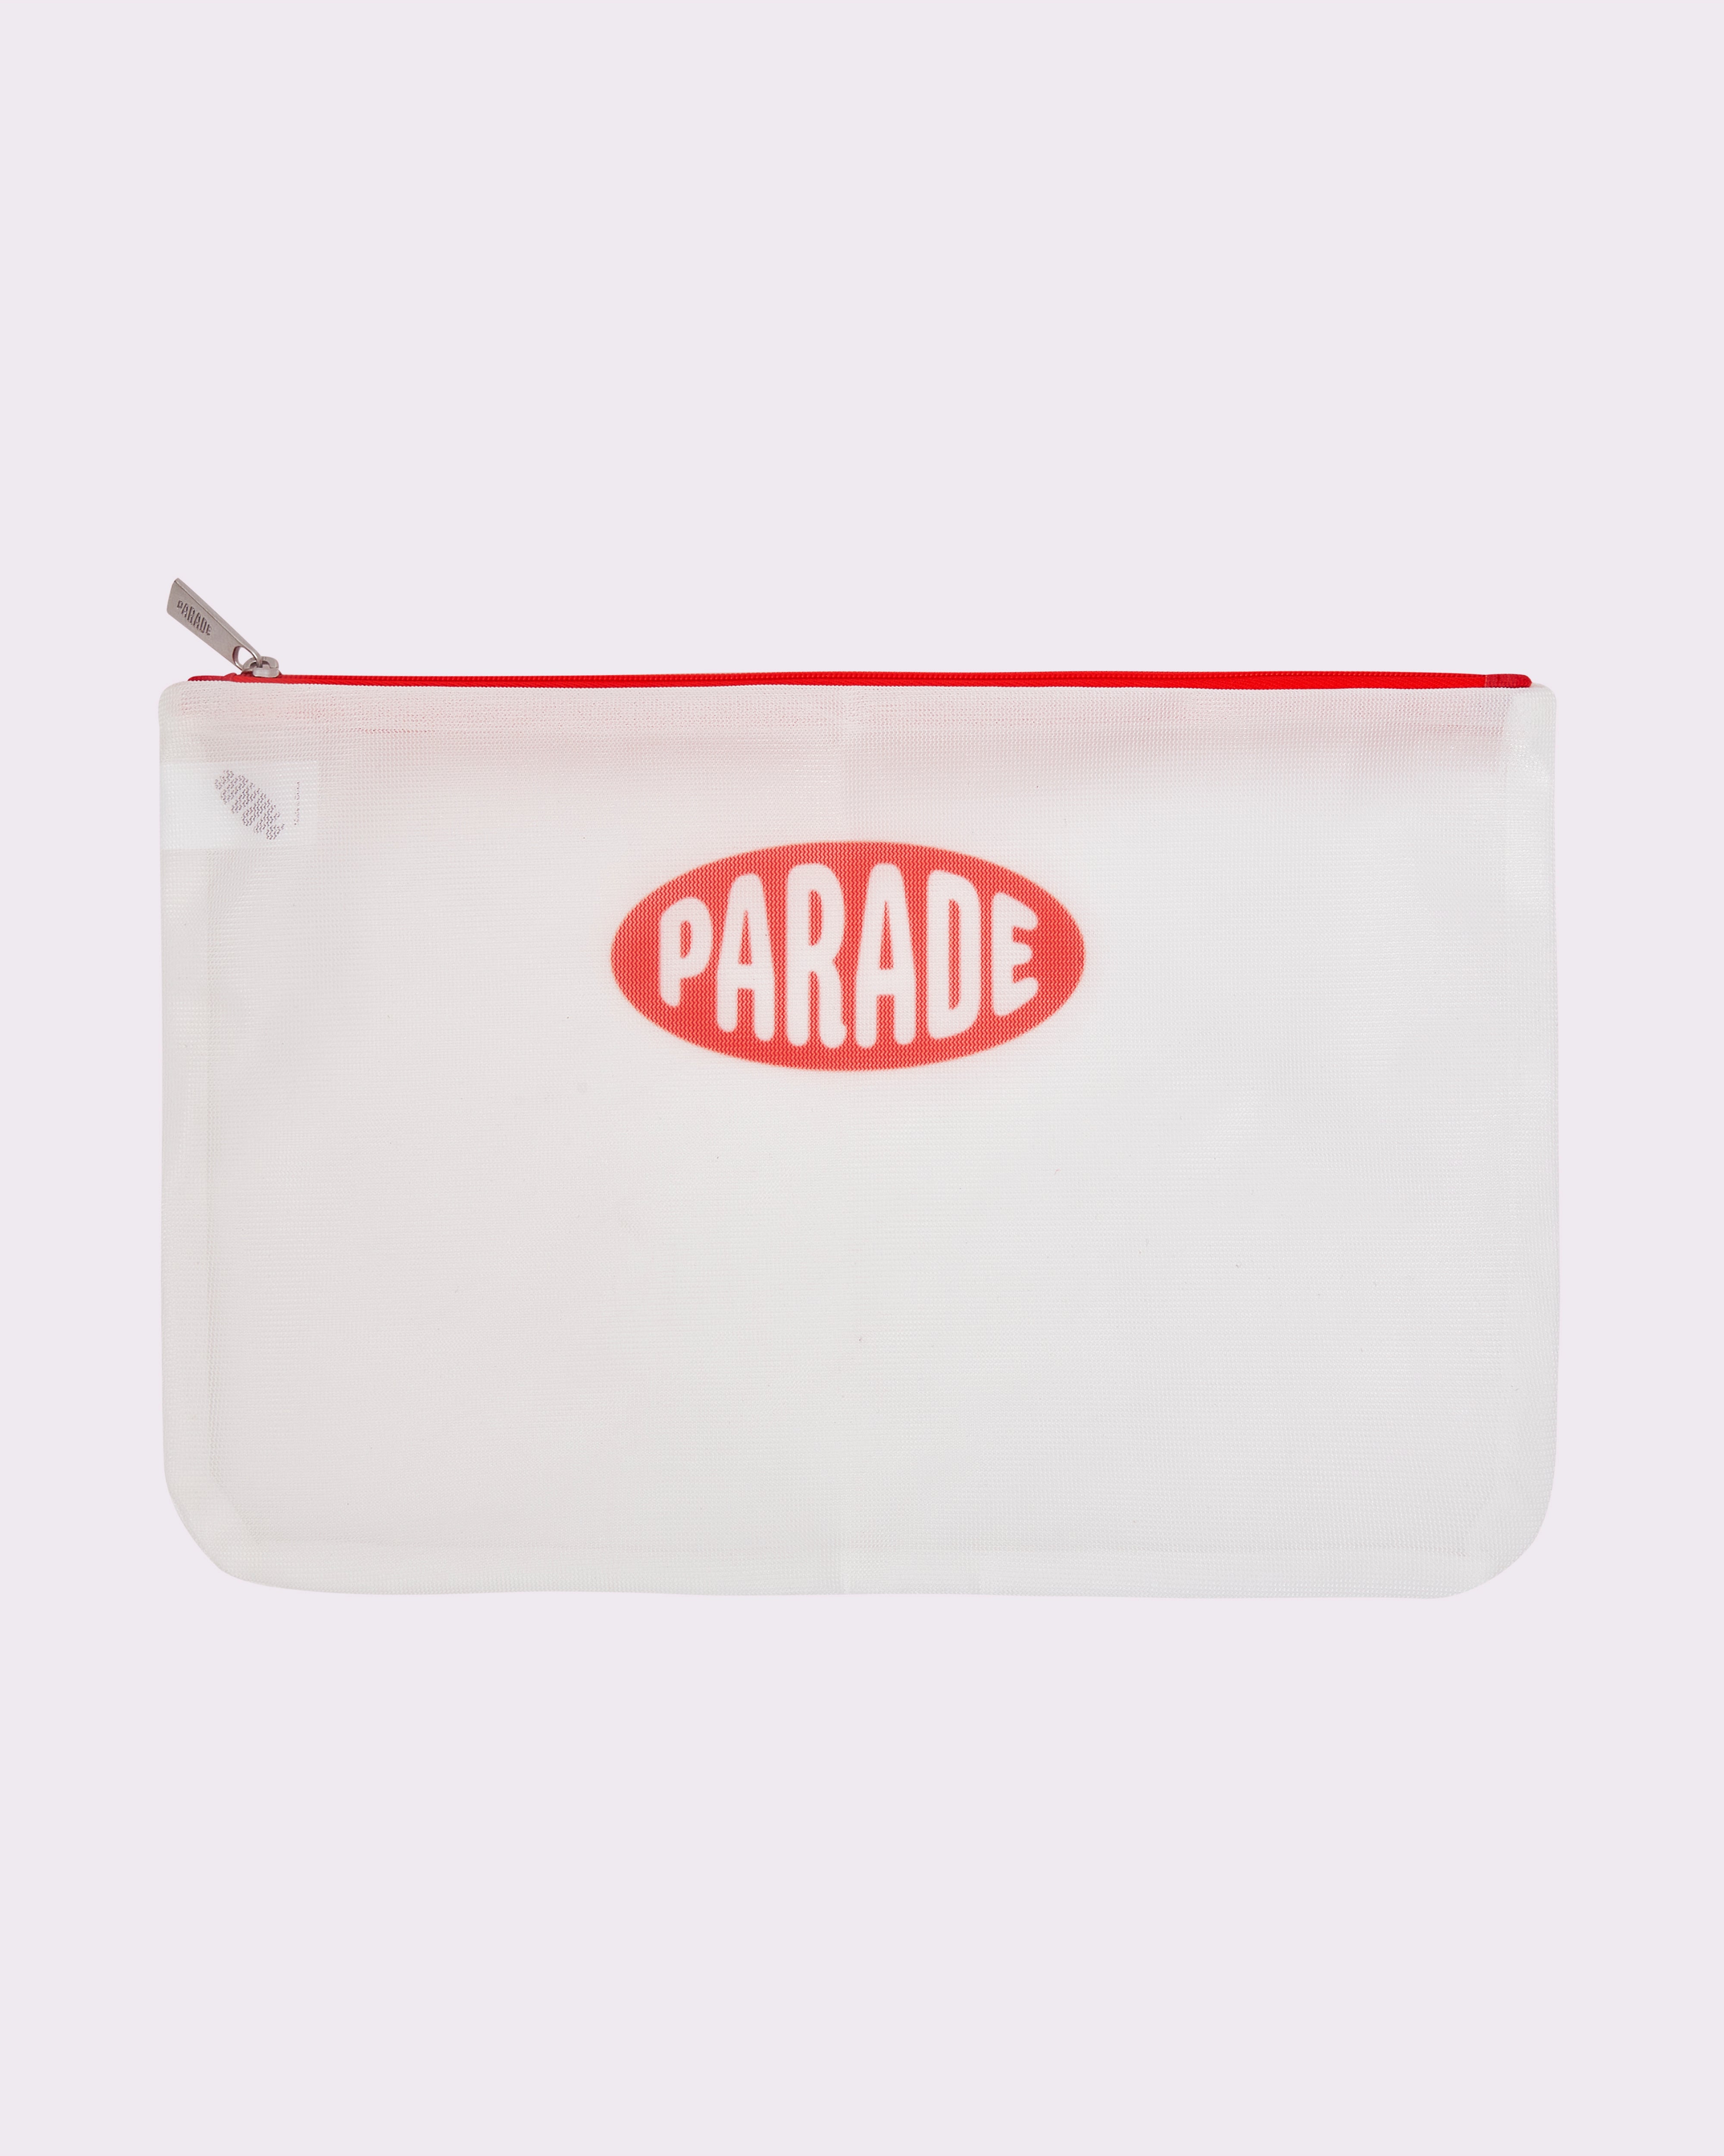 Bra Laundry Bag  Archive – Parade